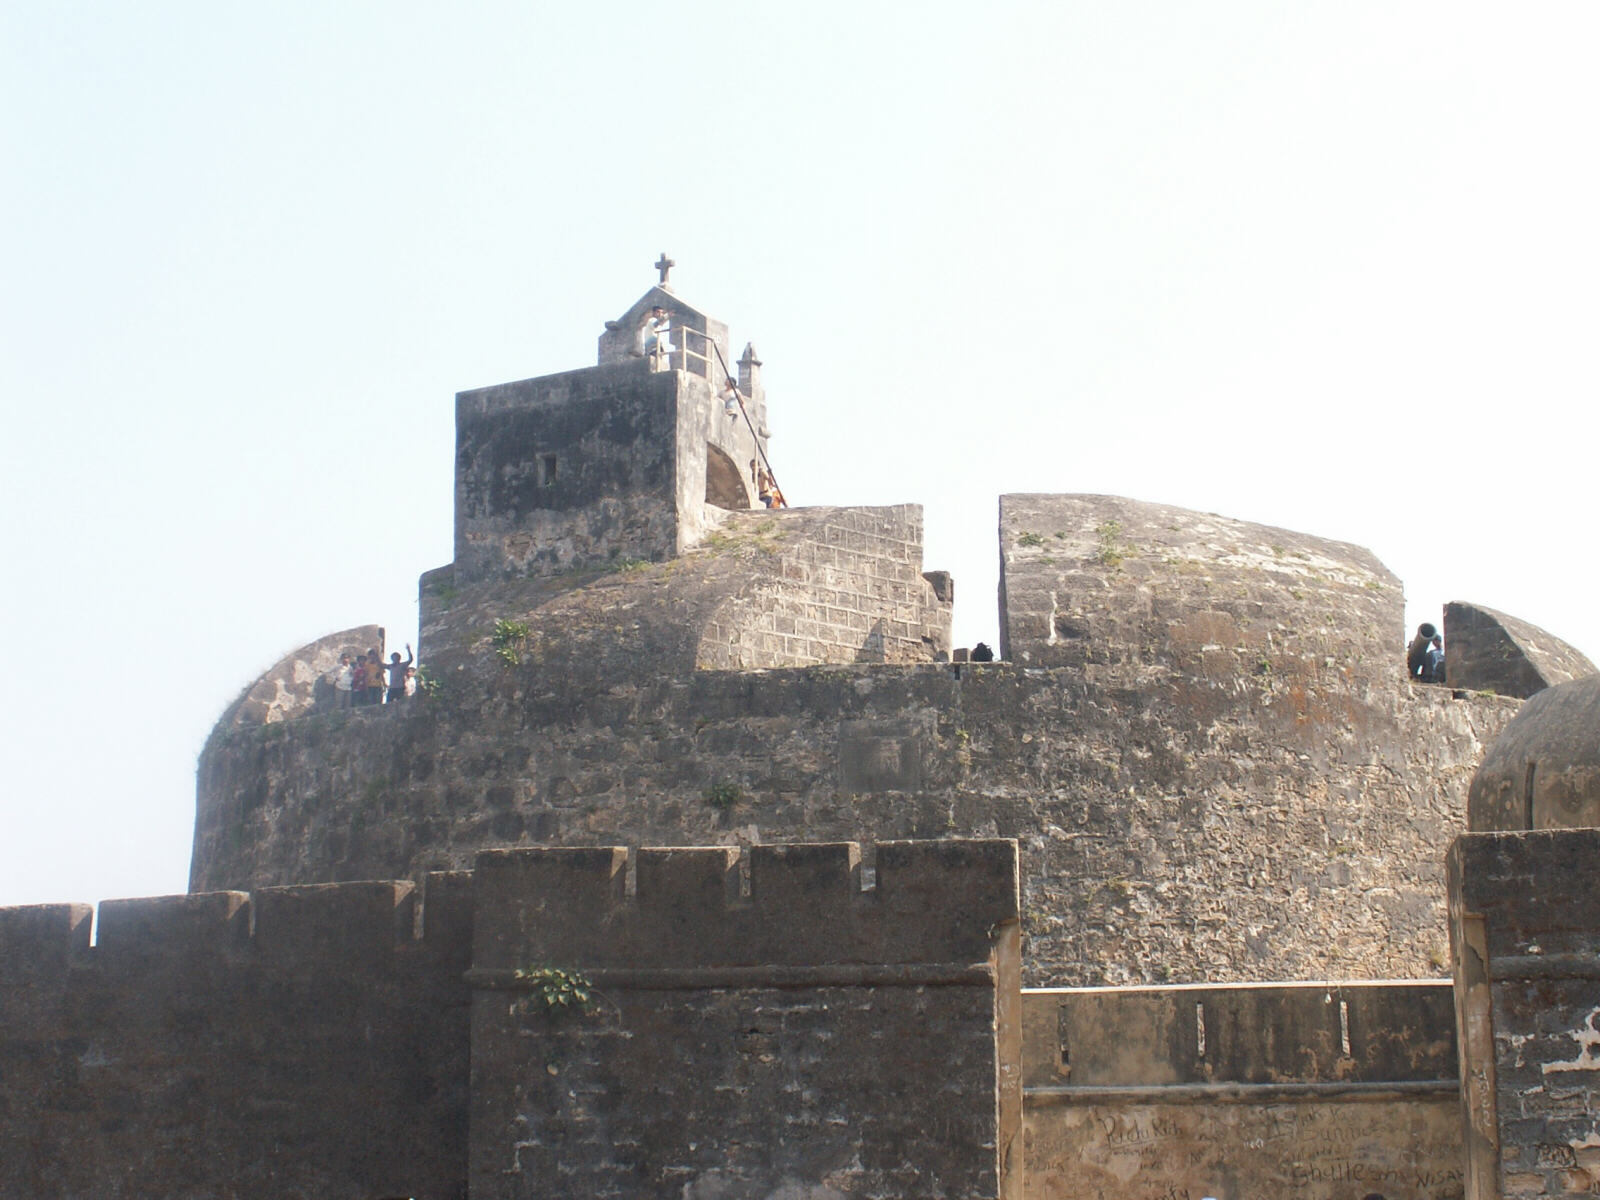 The Portuguese fort on Diu island, India